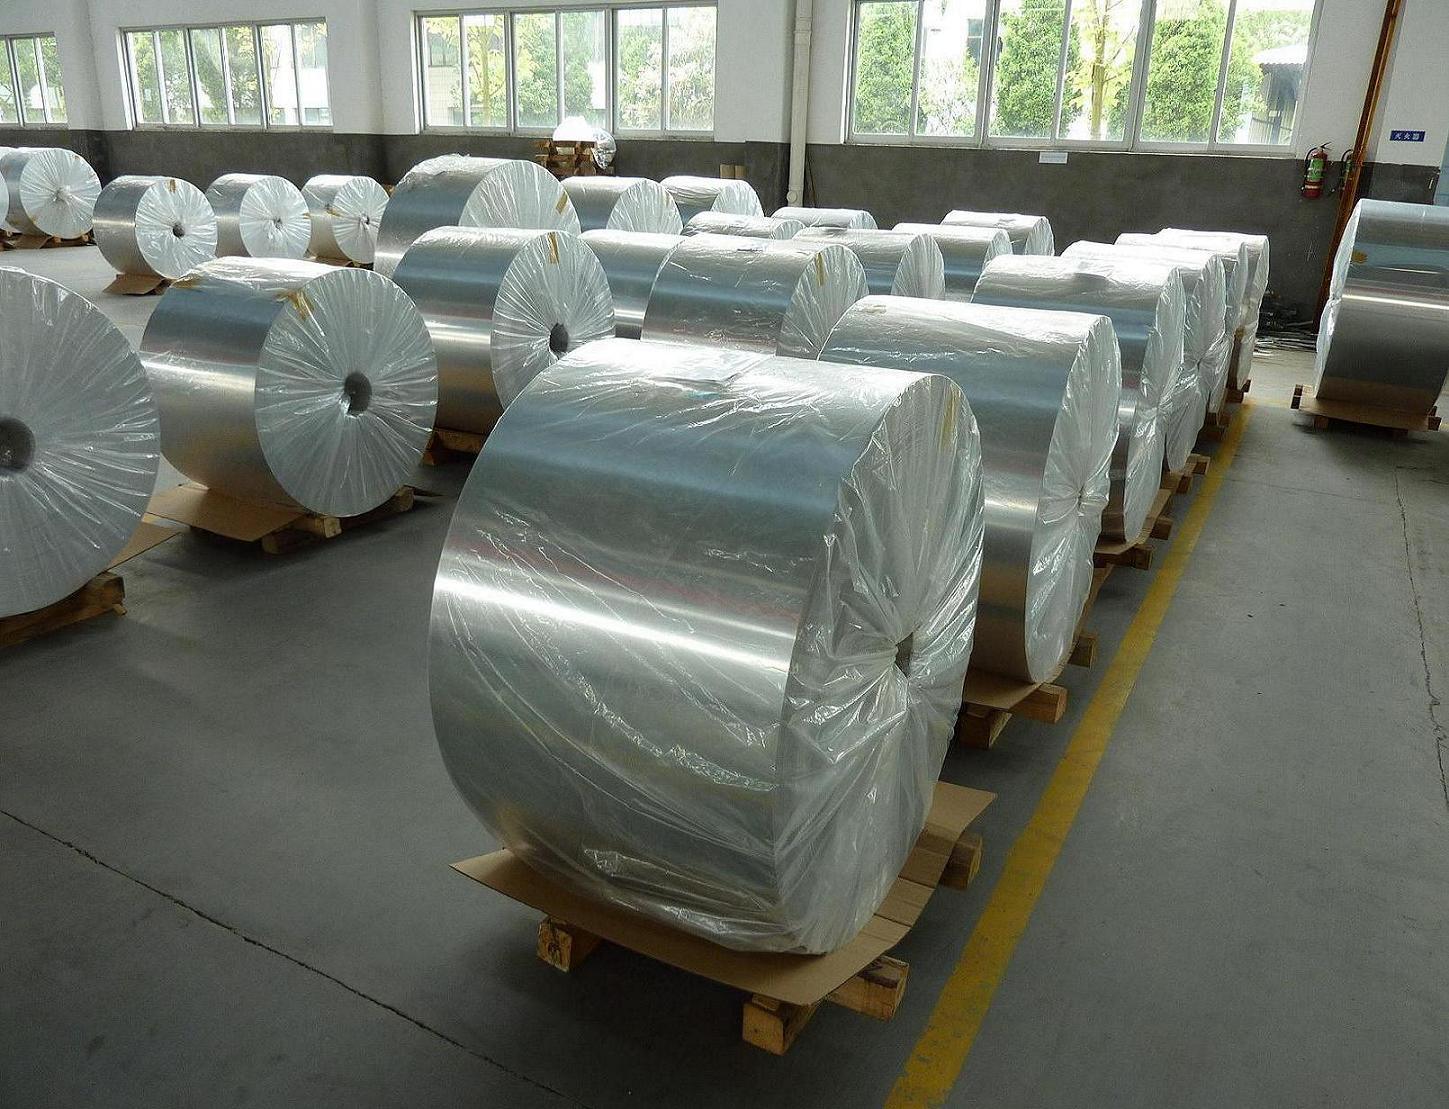 Aluminum Foil for Container